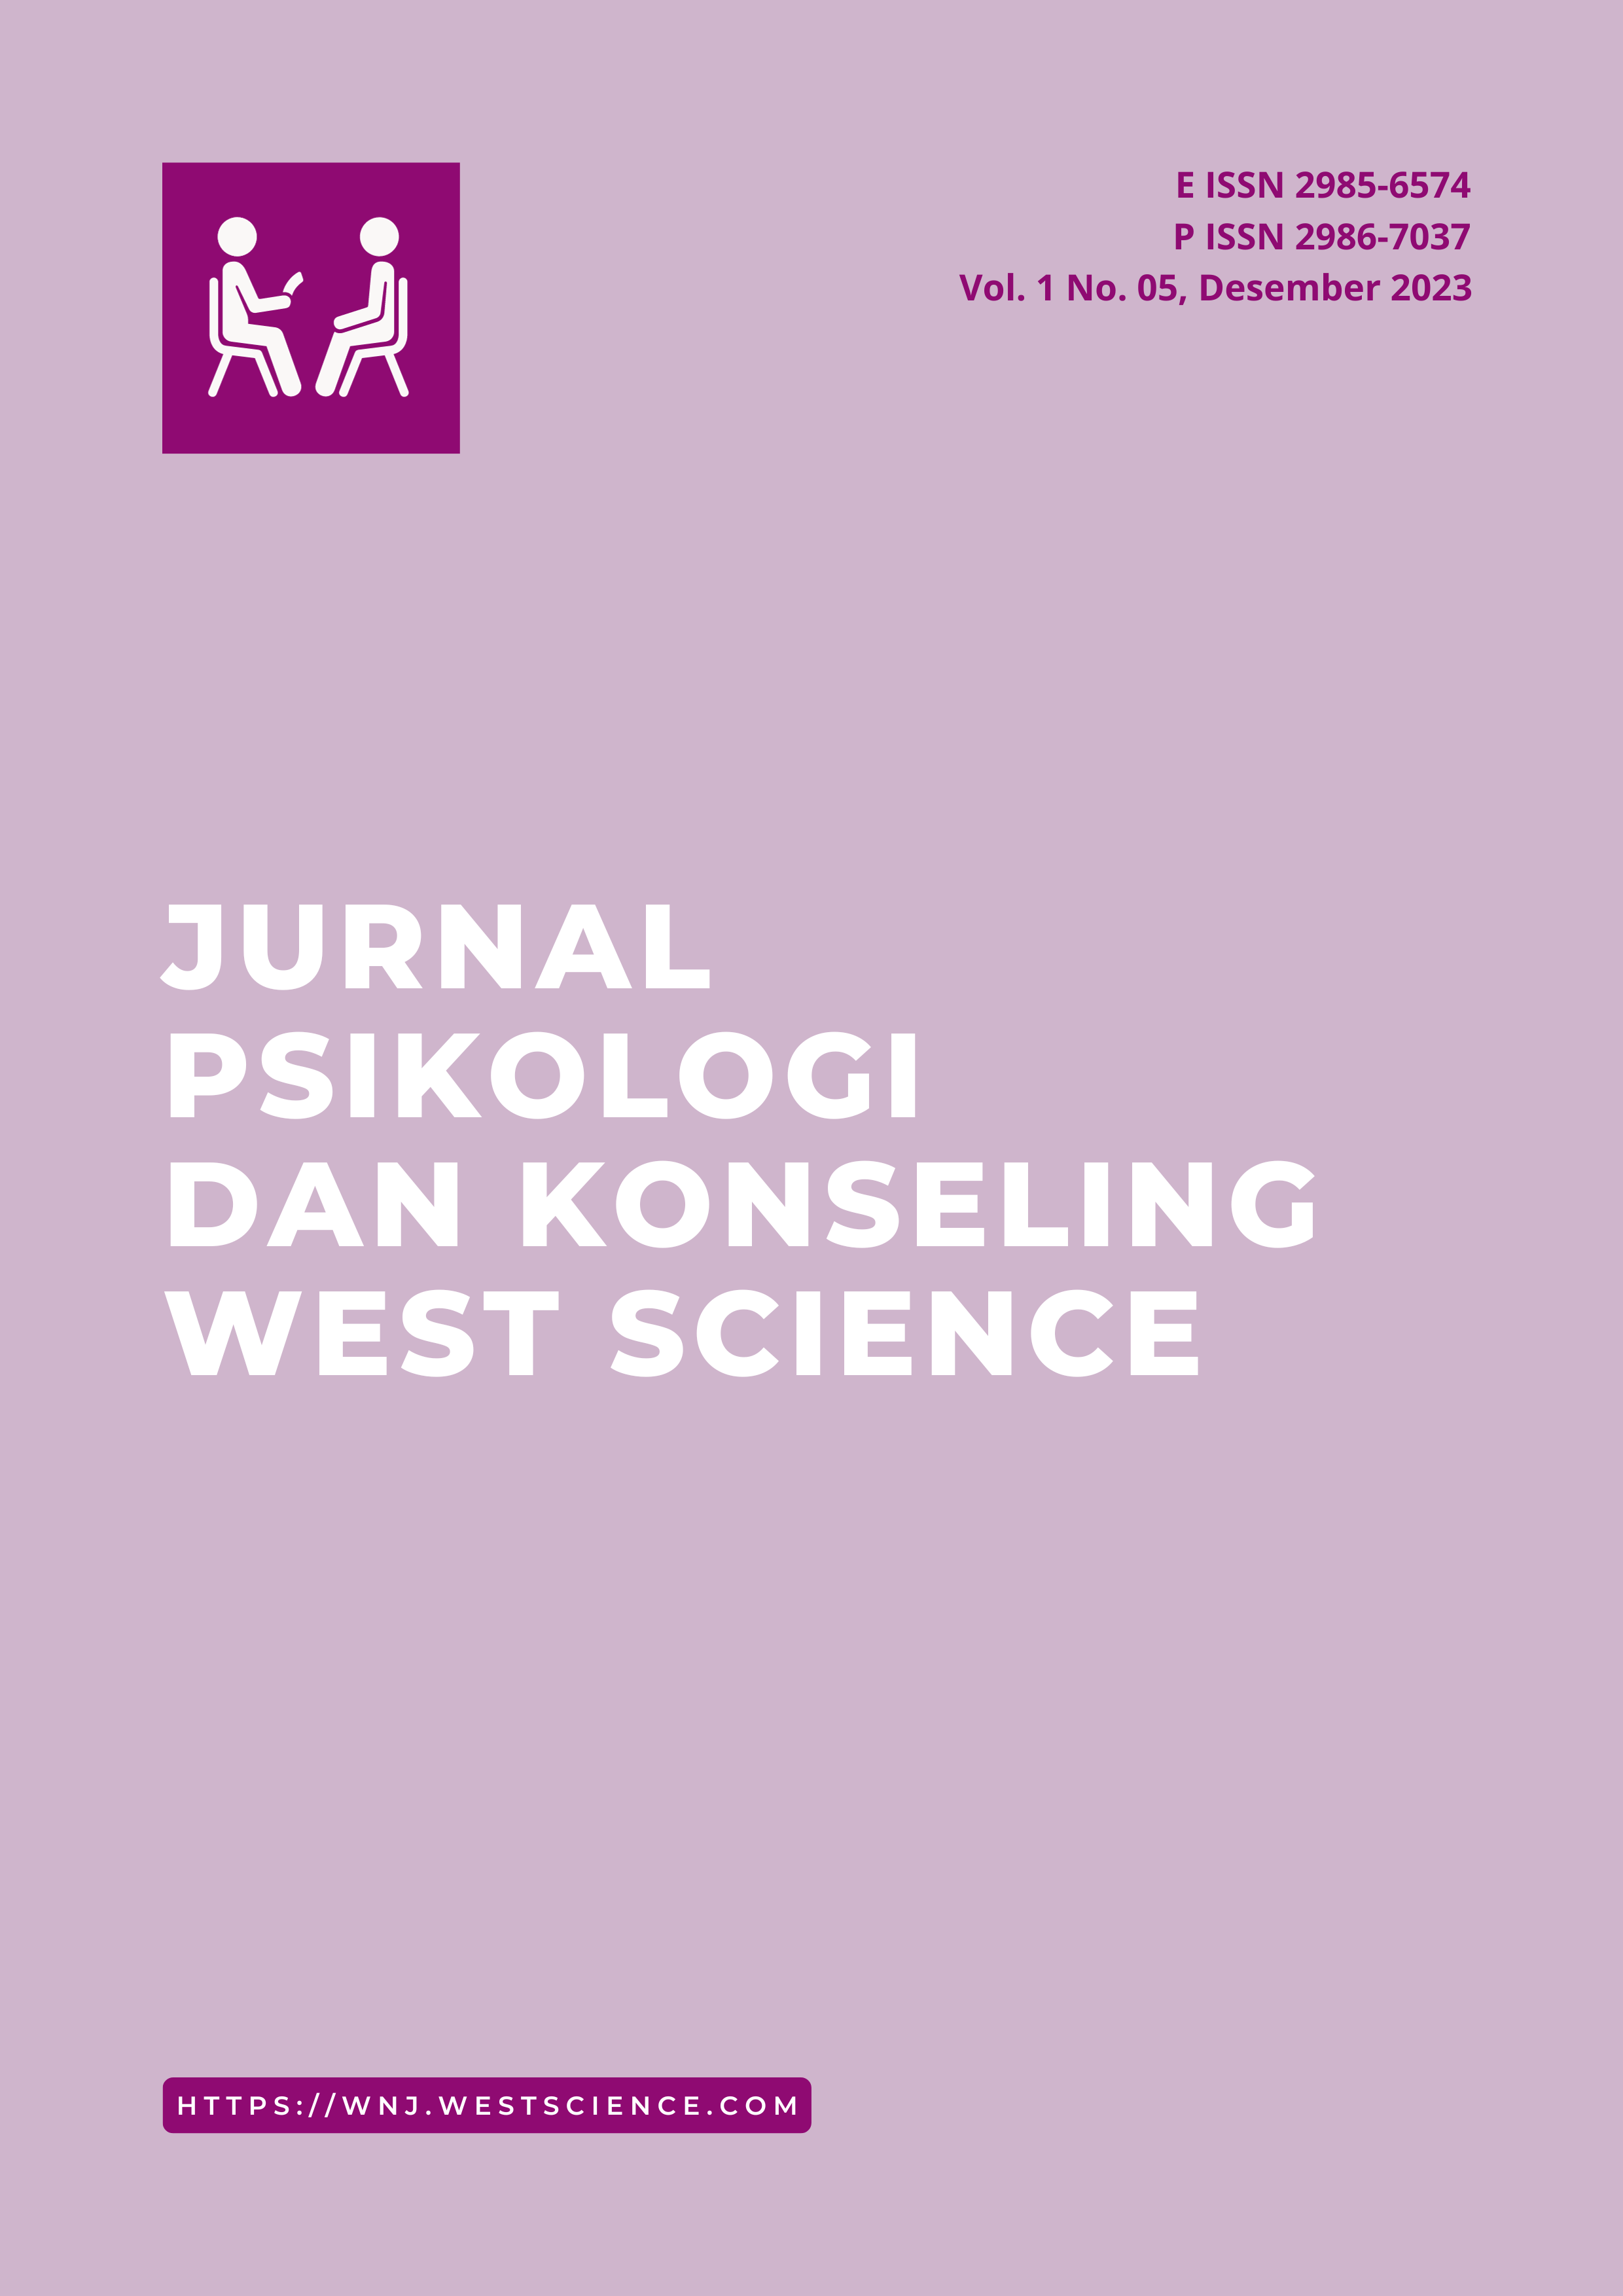 					Lihat Vol 1 No 05 (2023): Jurnal Psikologi dan Konseling West Science
				